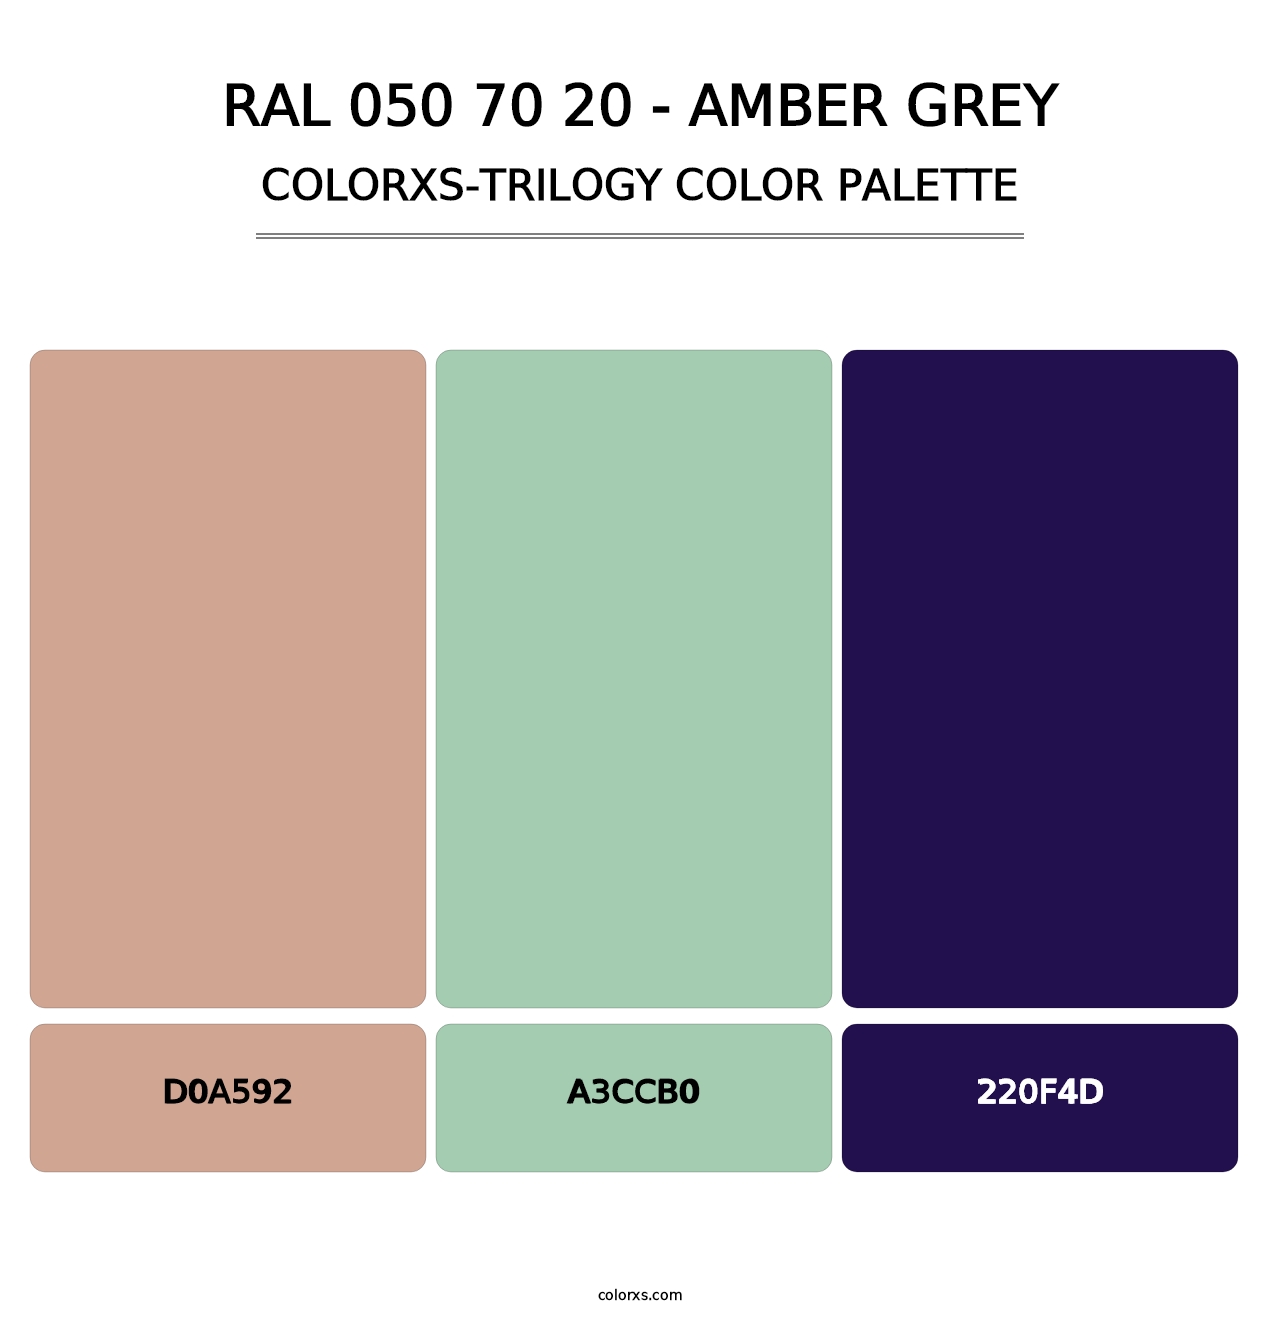 RAL 050 70 20 - Amber Grey - Colorxs Trilogy Palette